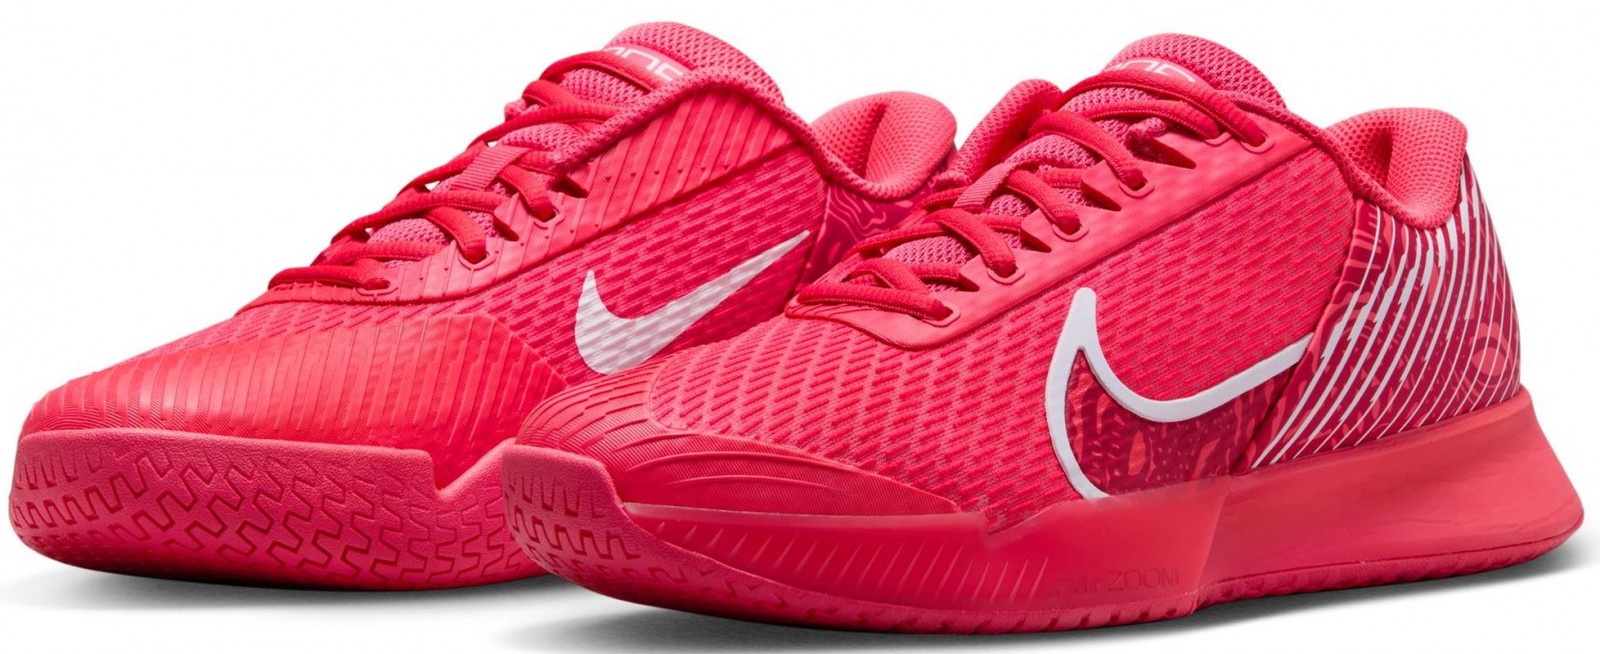 Тенісні кросівки чоловічі Nike Zoom Vapor Pro 2 ember glow/noble red/white